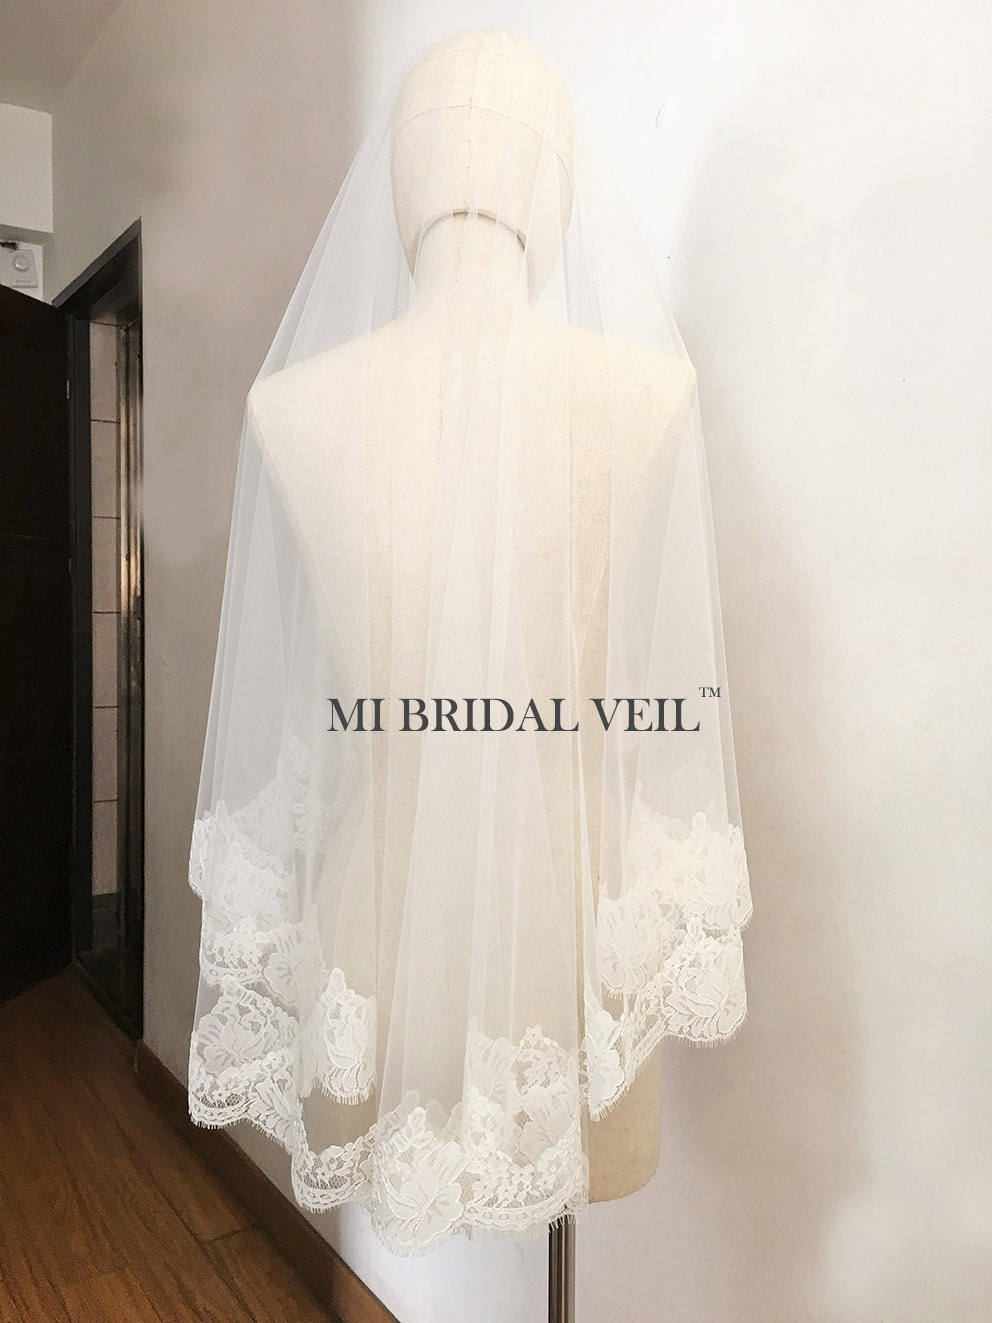 Mantilla Lace Wedding Veil, Chantilly Rose Lace Birdal Veil, Mi Bridal